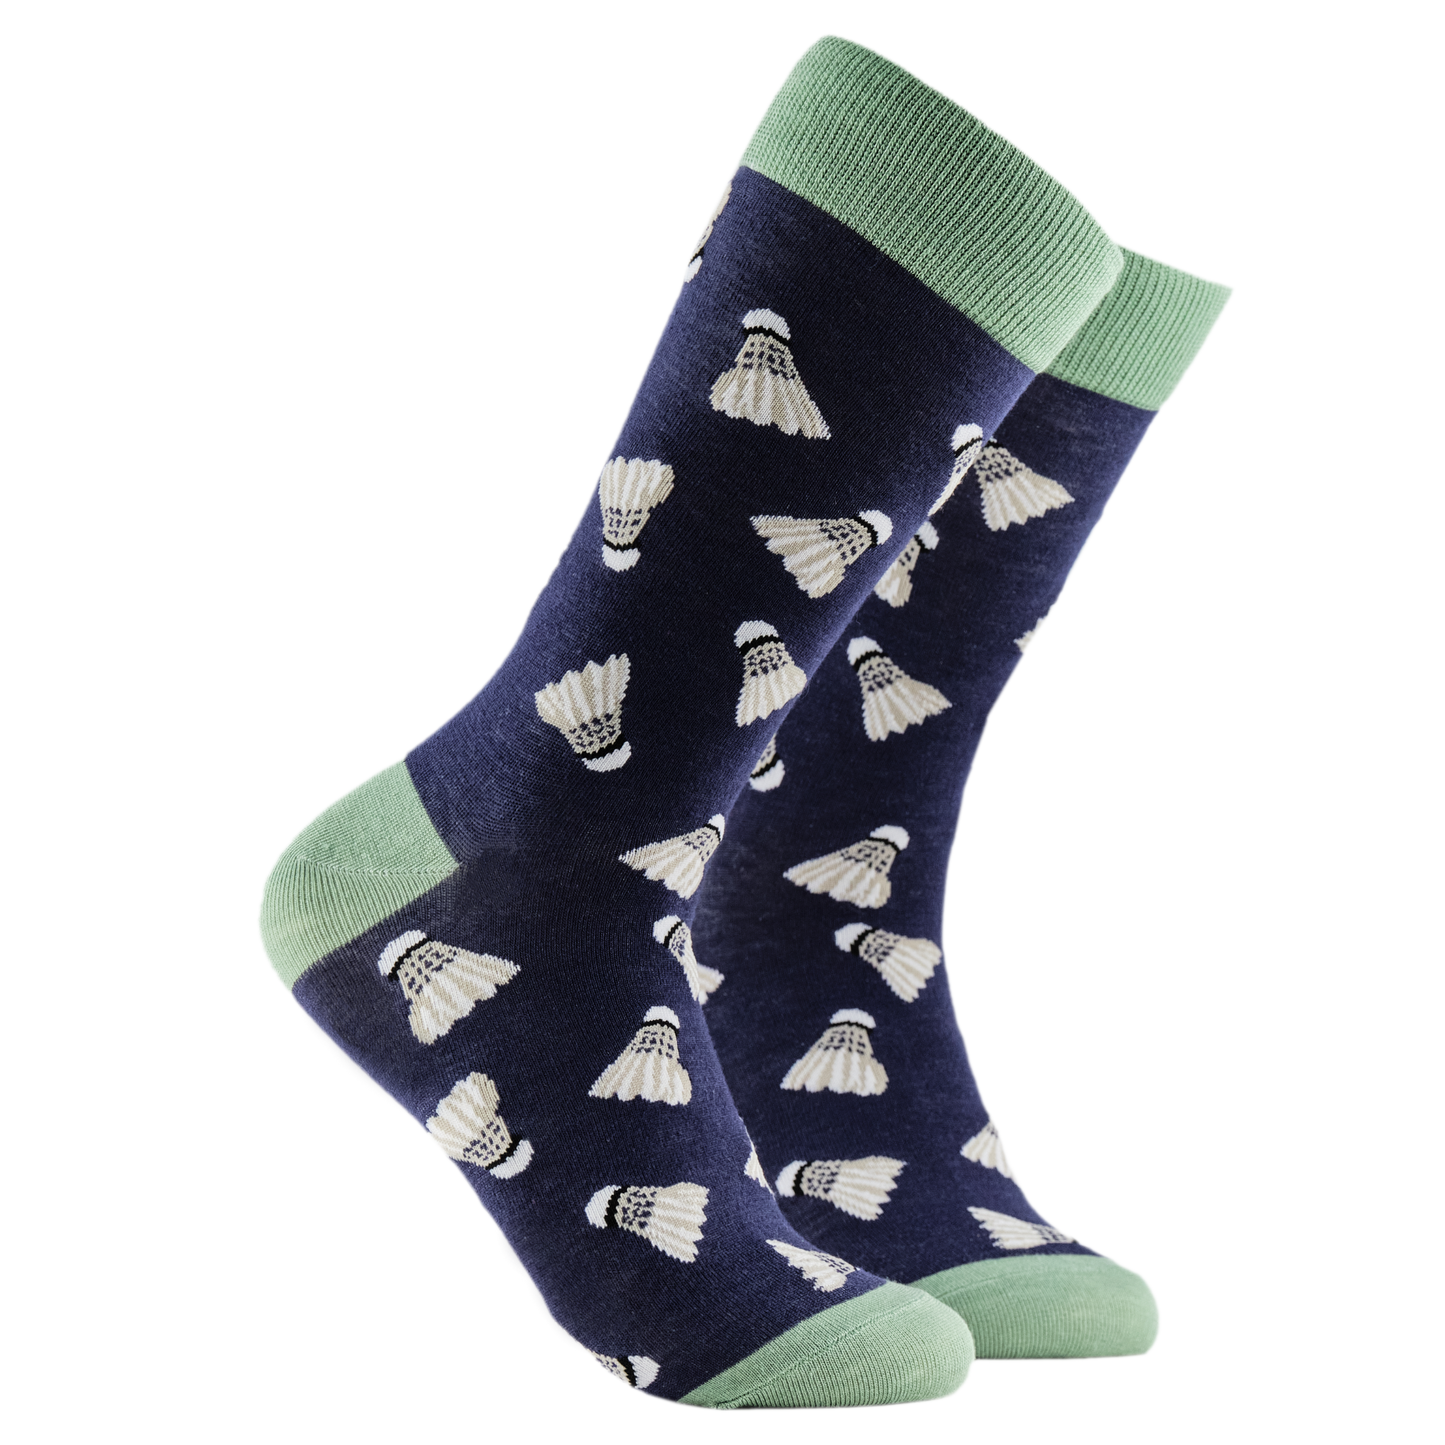 Shuttlecocks Bamboo Socks. A pair of socks depicting shuttlecocks. Dark blue legs, green cuff, heel and toe.